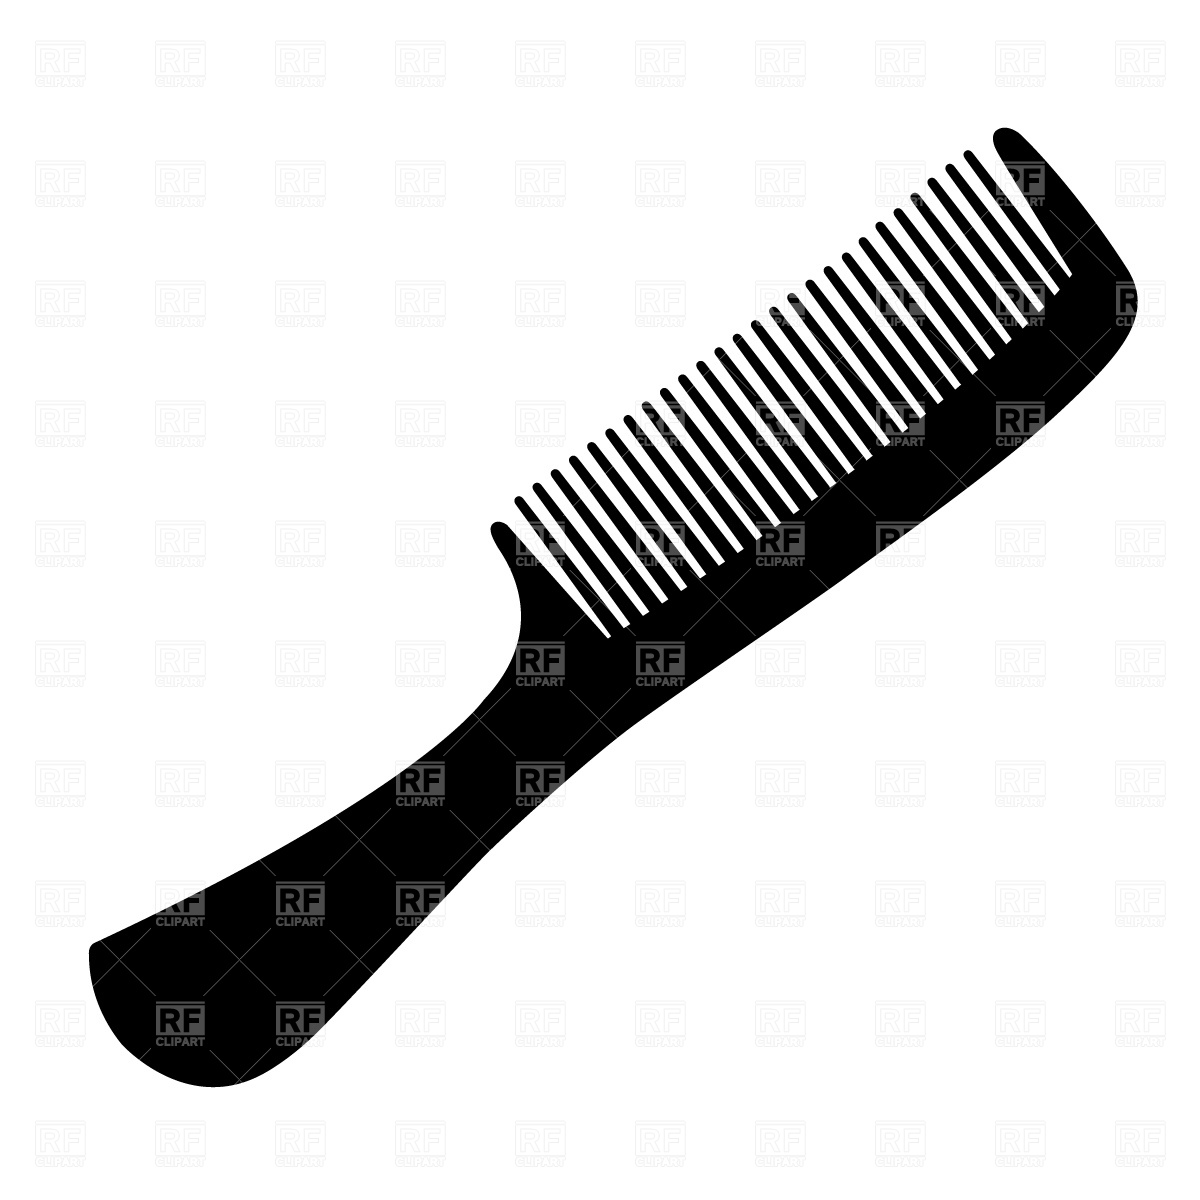 hair brush clipart black and white - photo #33